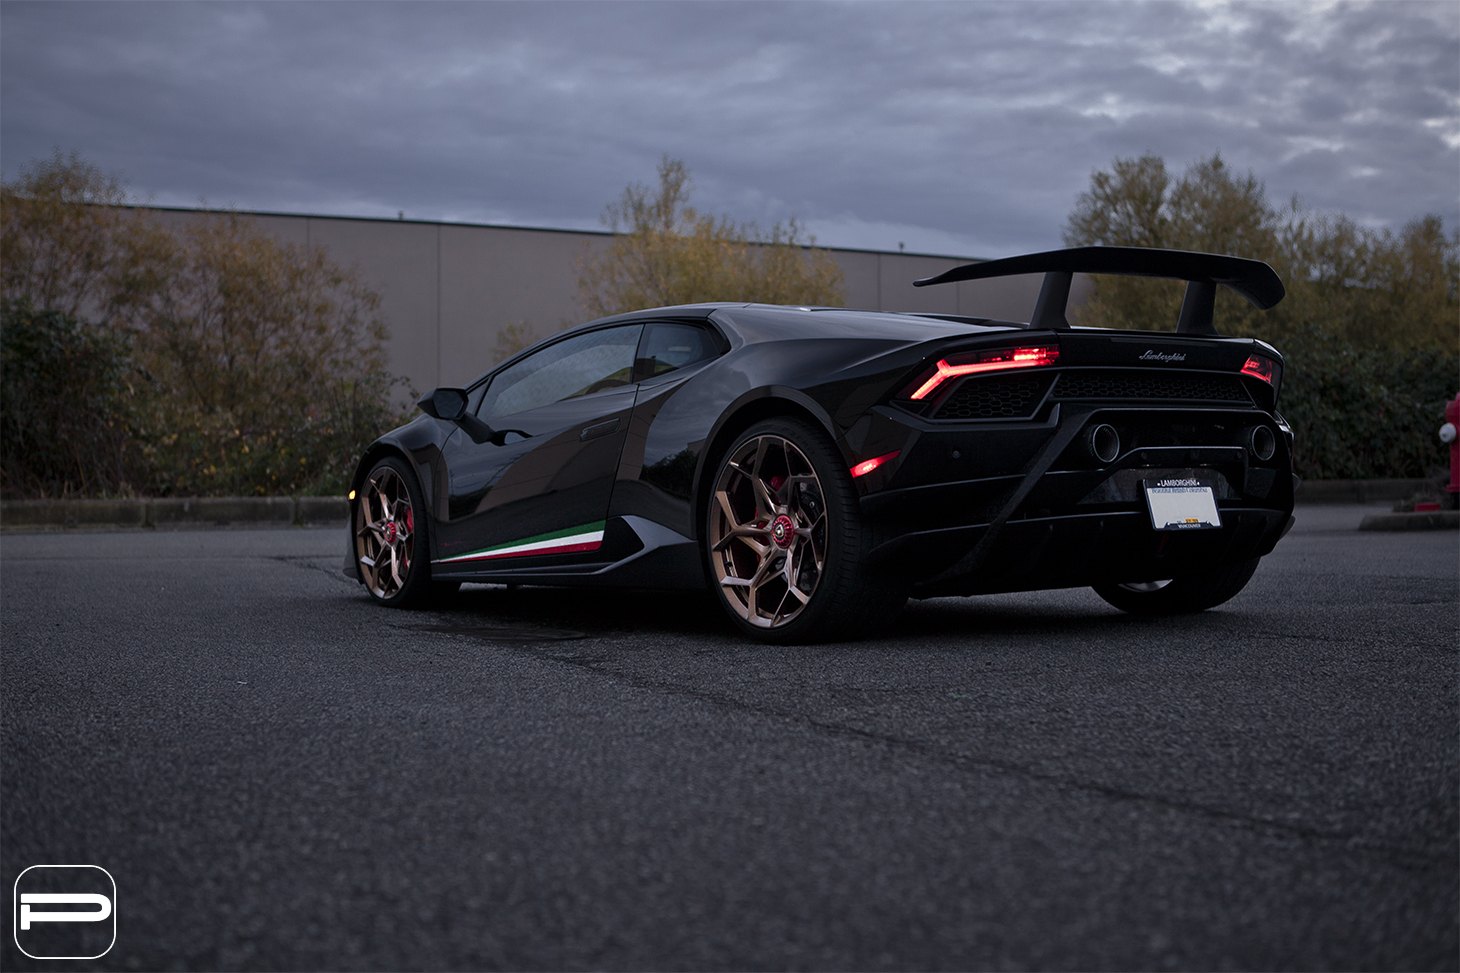 Large Wing Spoiler on Black Lamborghini Huracan - Photo by PUR Wheels